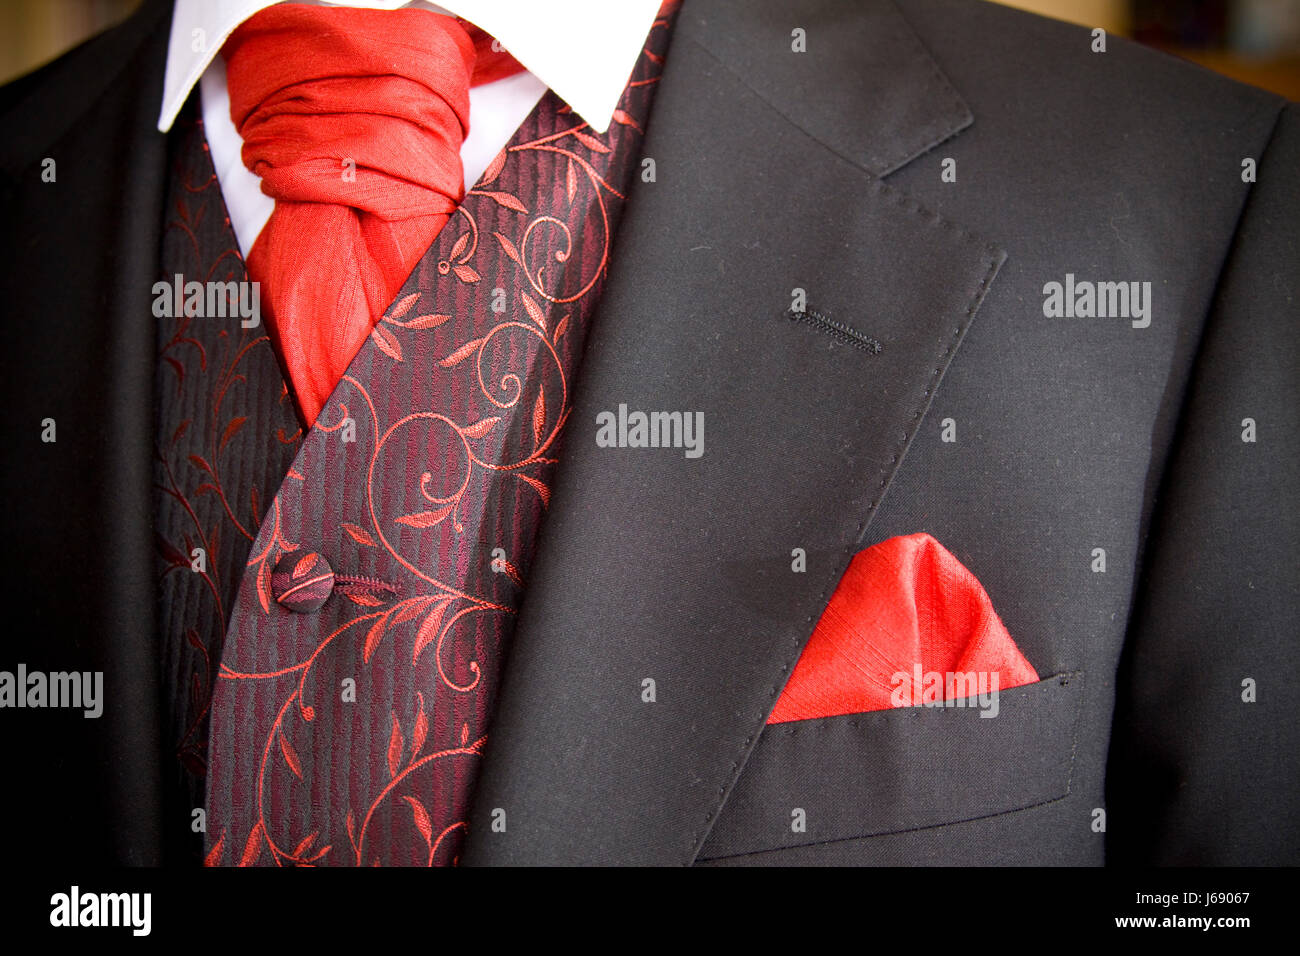 La moda maschile maschio tuxedo cravatta ascot partner sposo sposo maschile maschio Foto Stock